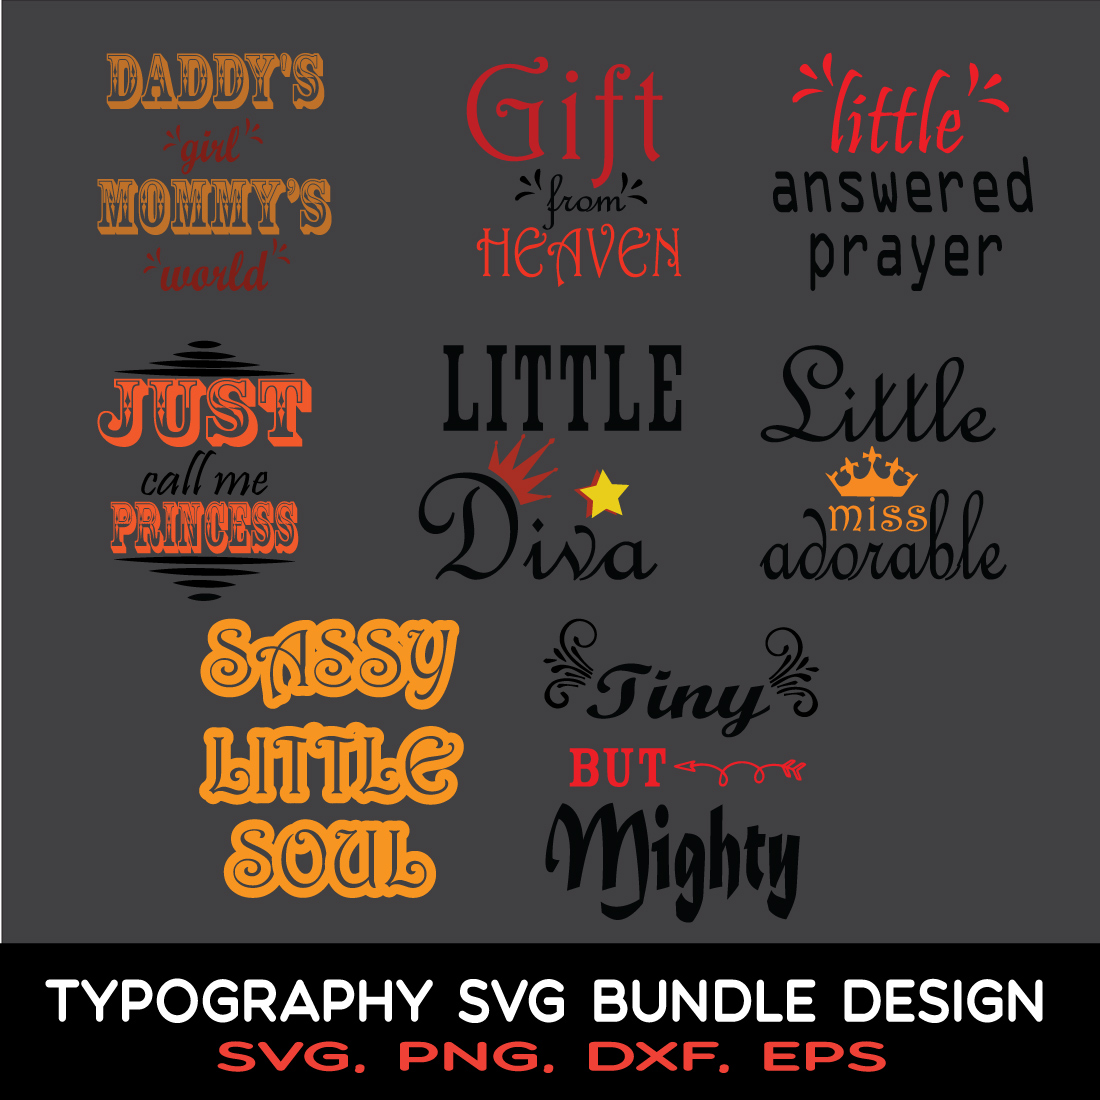 Typography T-shirt Bundle Design cover image.